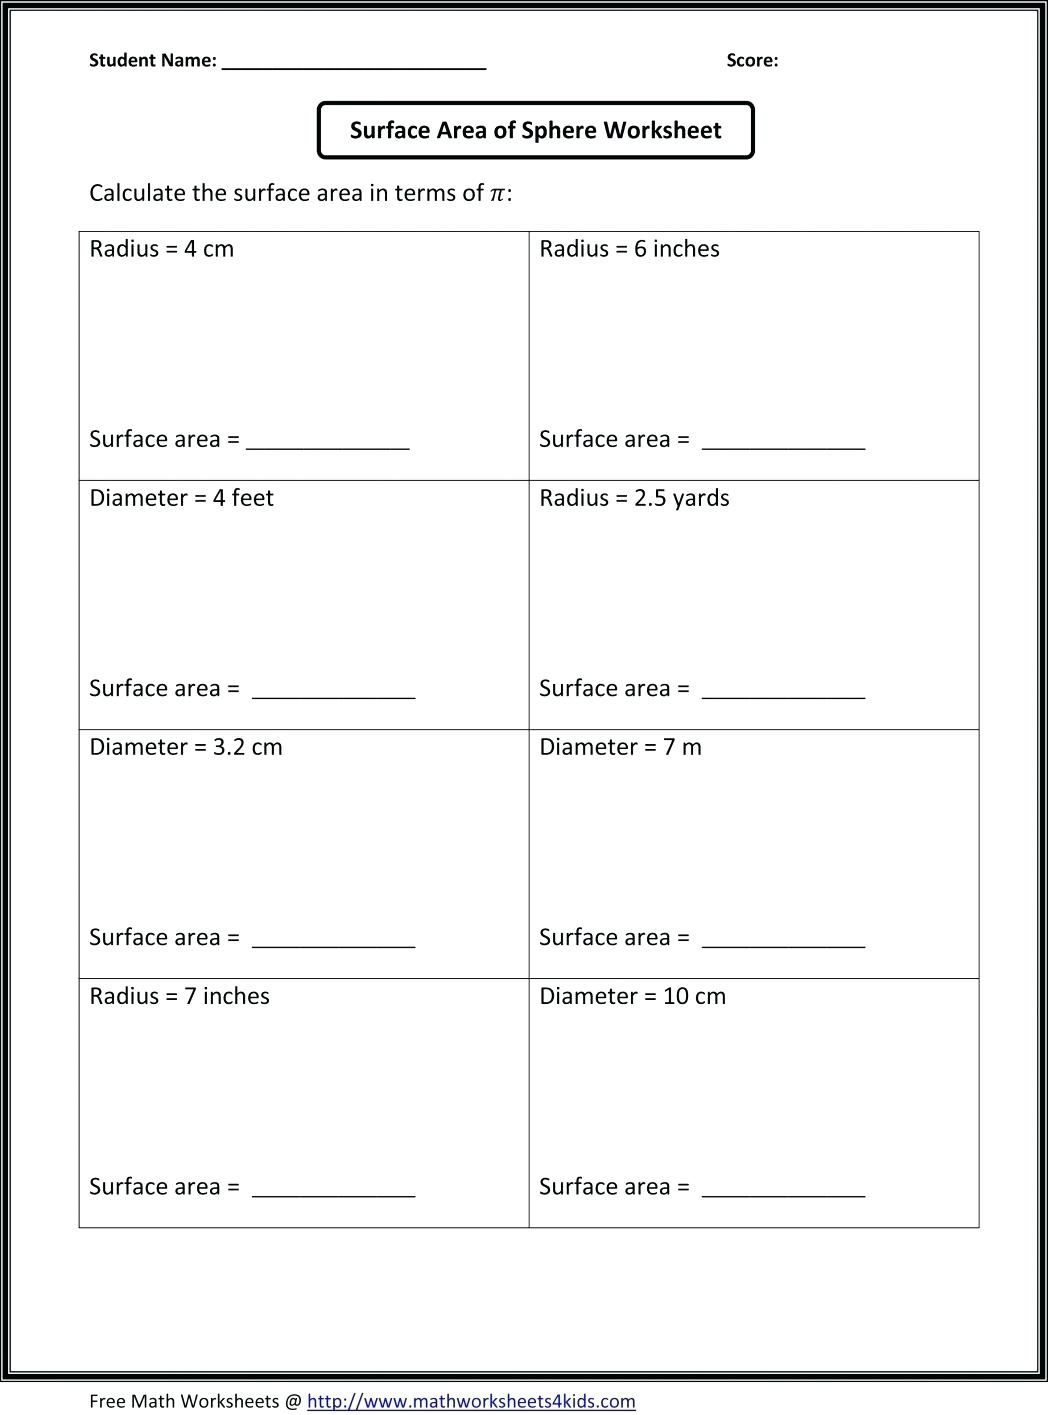 Ged Math Preparation Free Printable Math Worksheets Library Practice | Ged Math Printable Worksheets